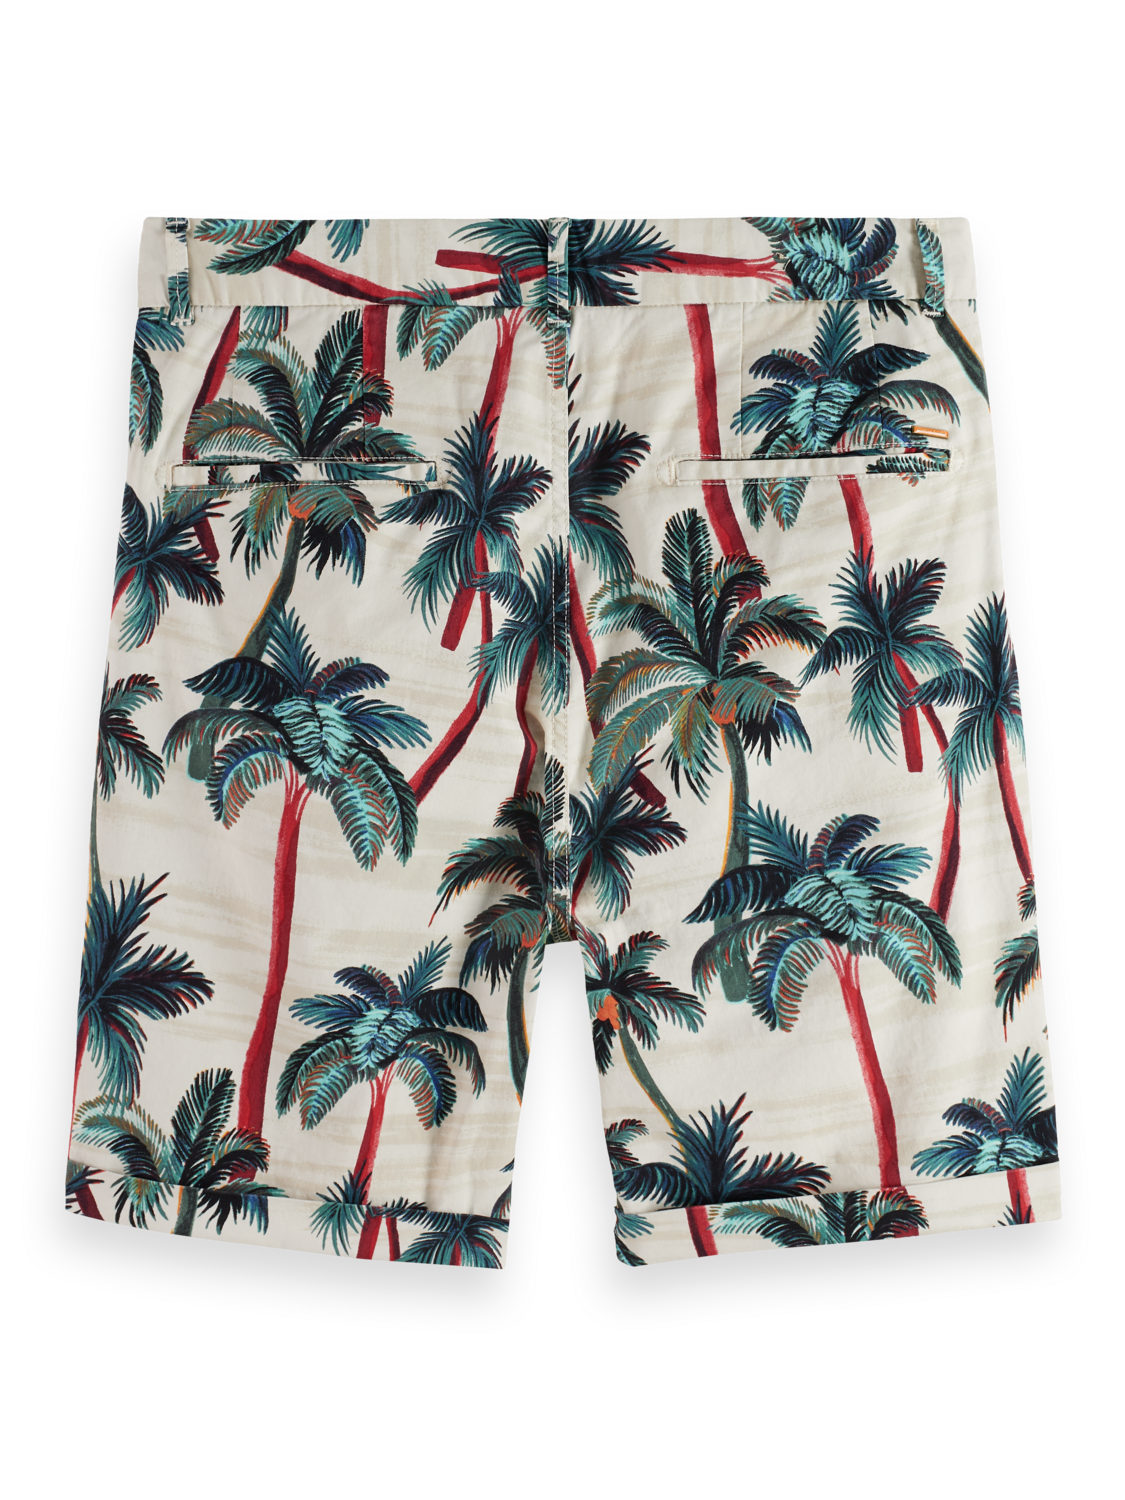 Scotch & Soda - Stuart - Printed Chino Shorts - Palm Trees